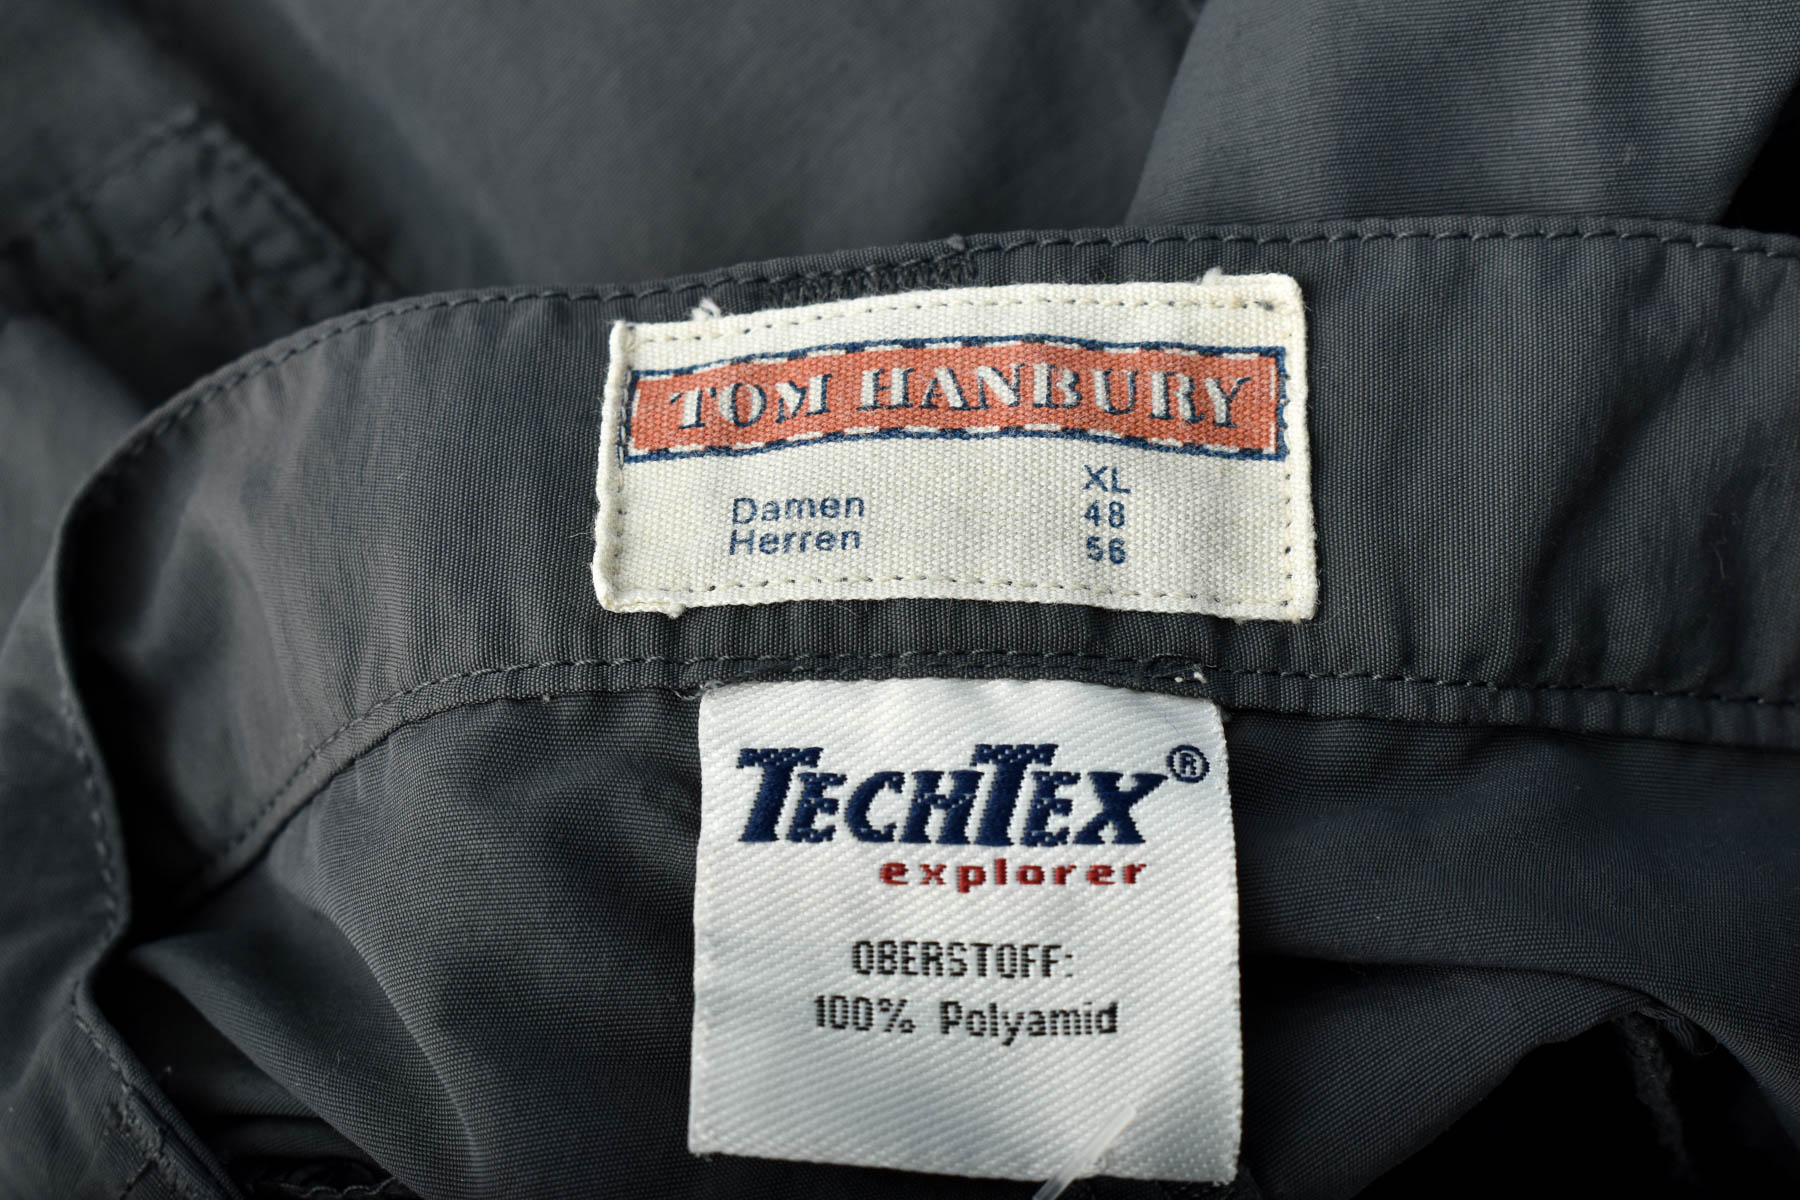 Pantalon pentru bărbați - Tom Hanbury - 2